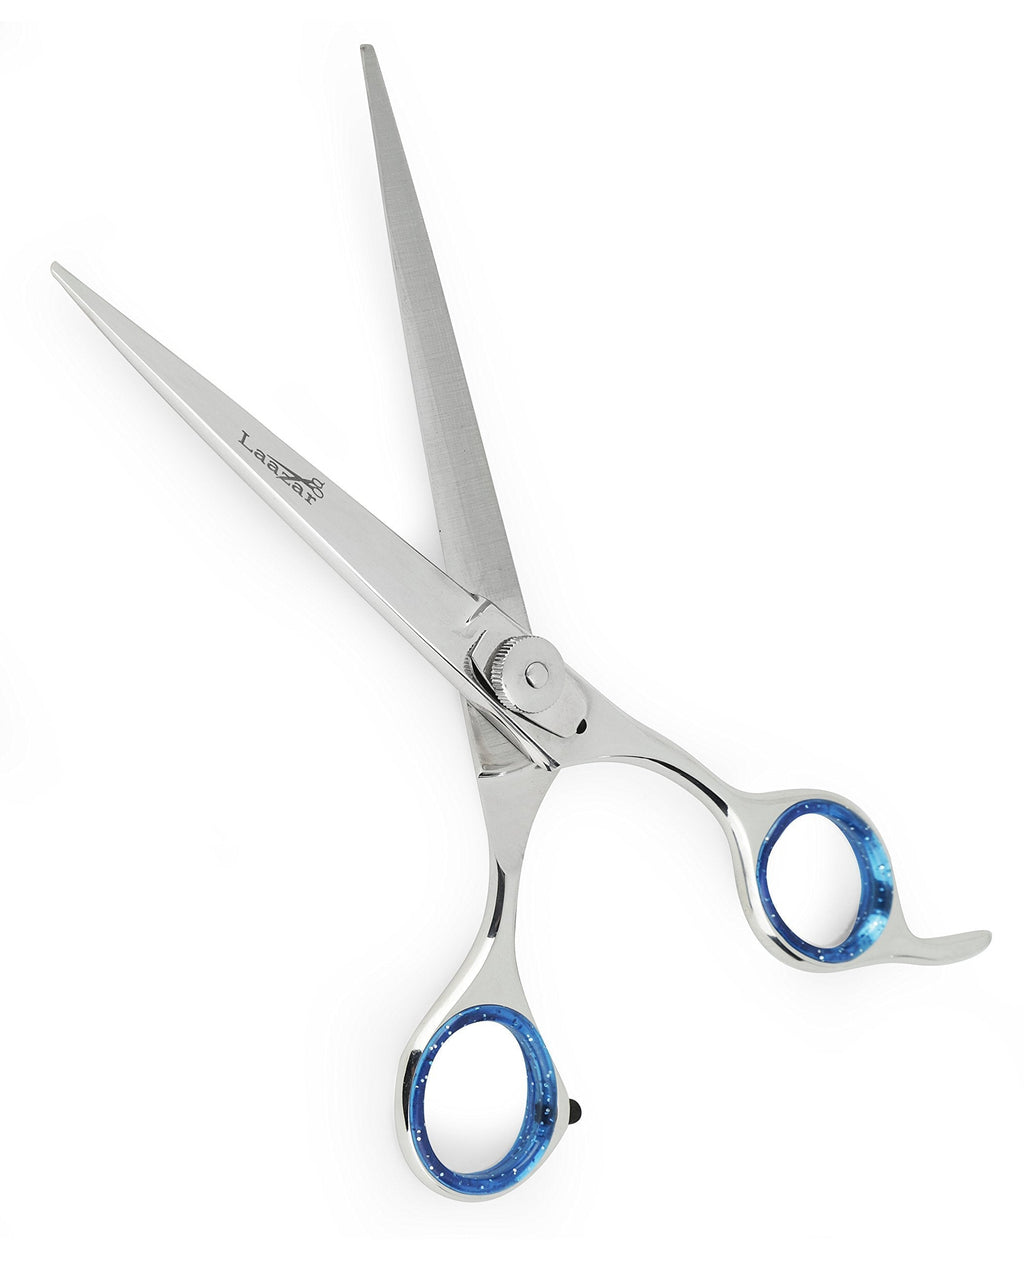 [Australia] - Laazar Pro Shears, Curved Pet Grooming Shear, 8" Scissors 